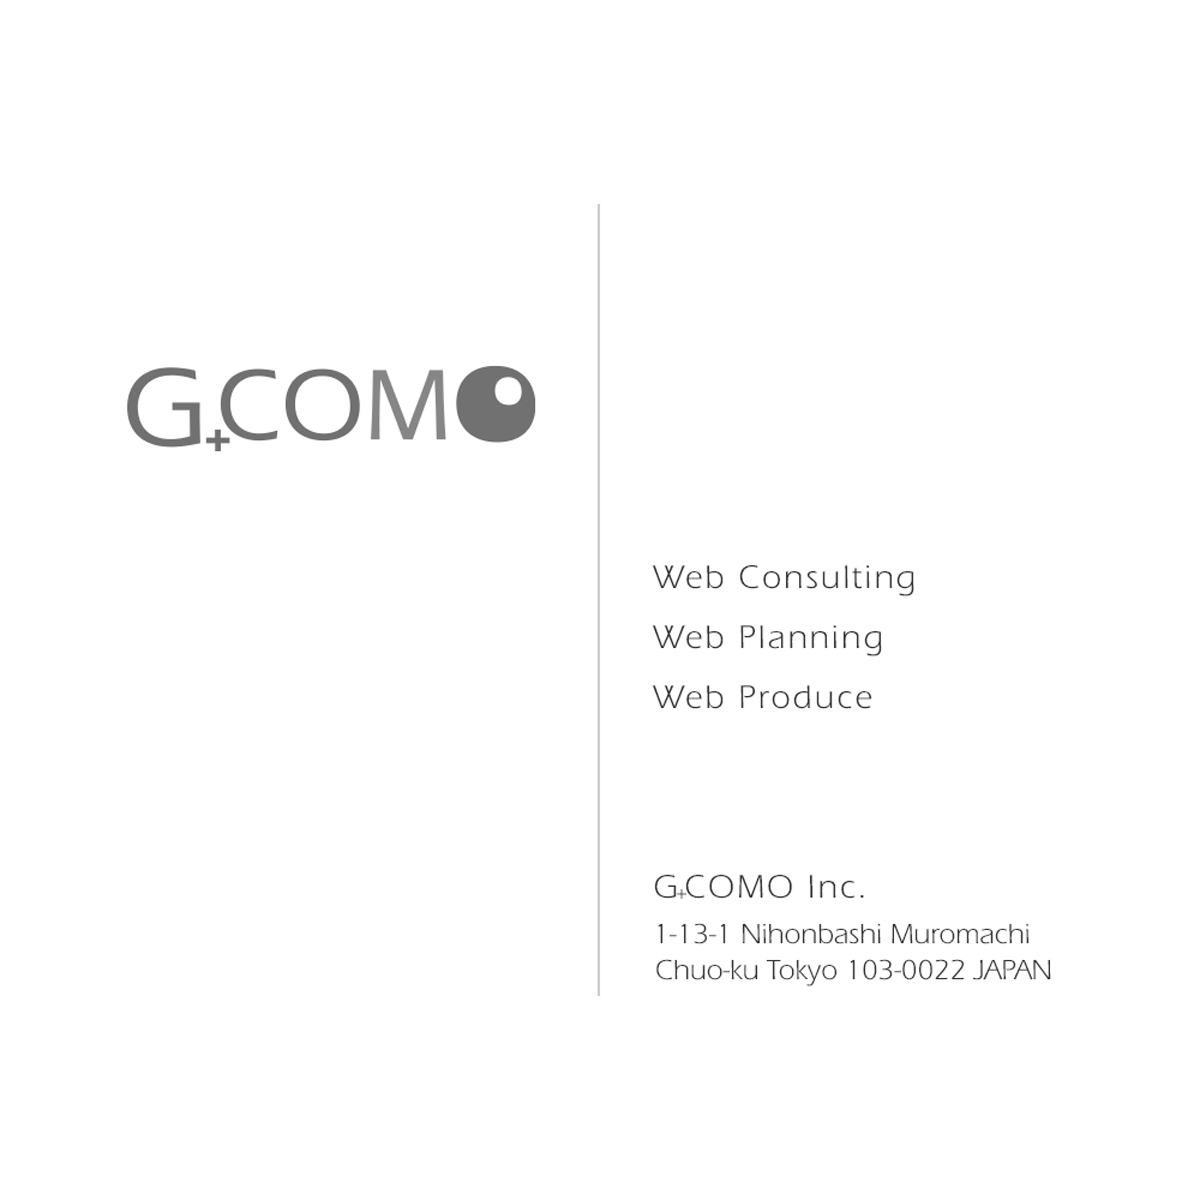 GCOMO Inc. / Web Consulting, Web Planning, Web Produce / 株式会社ジーコモ 東京都中央区日本橋室町1-13-1 DKノア4F